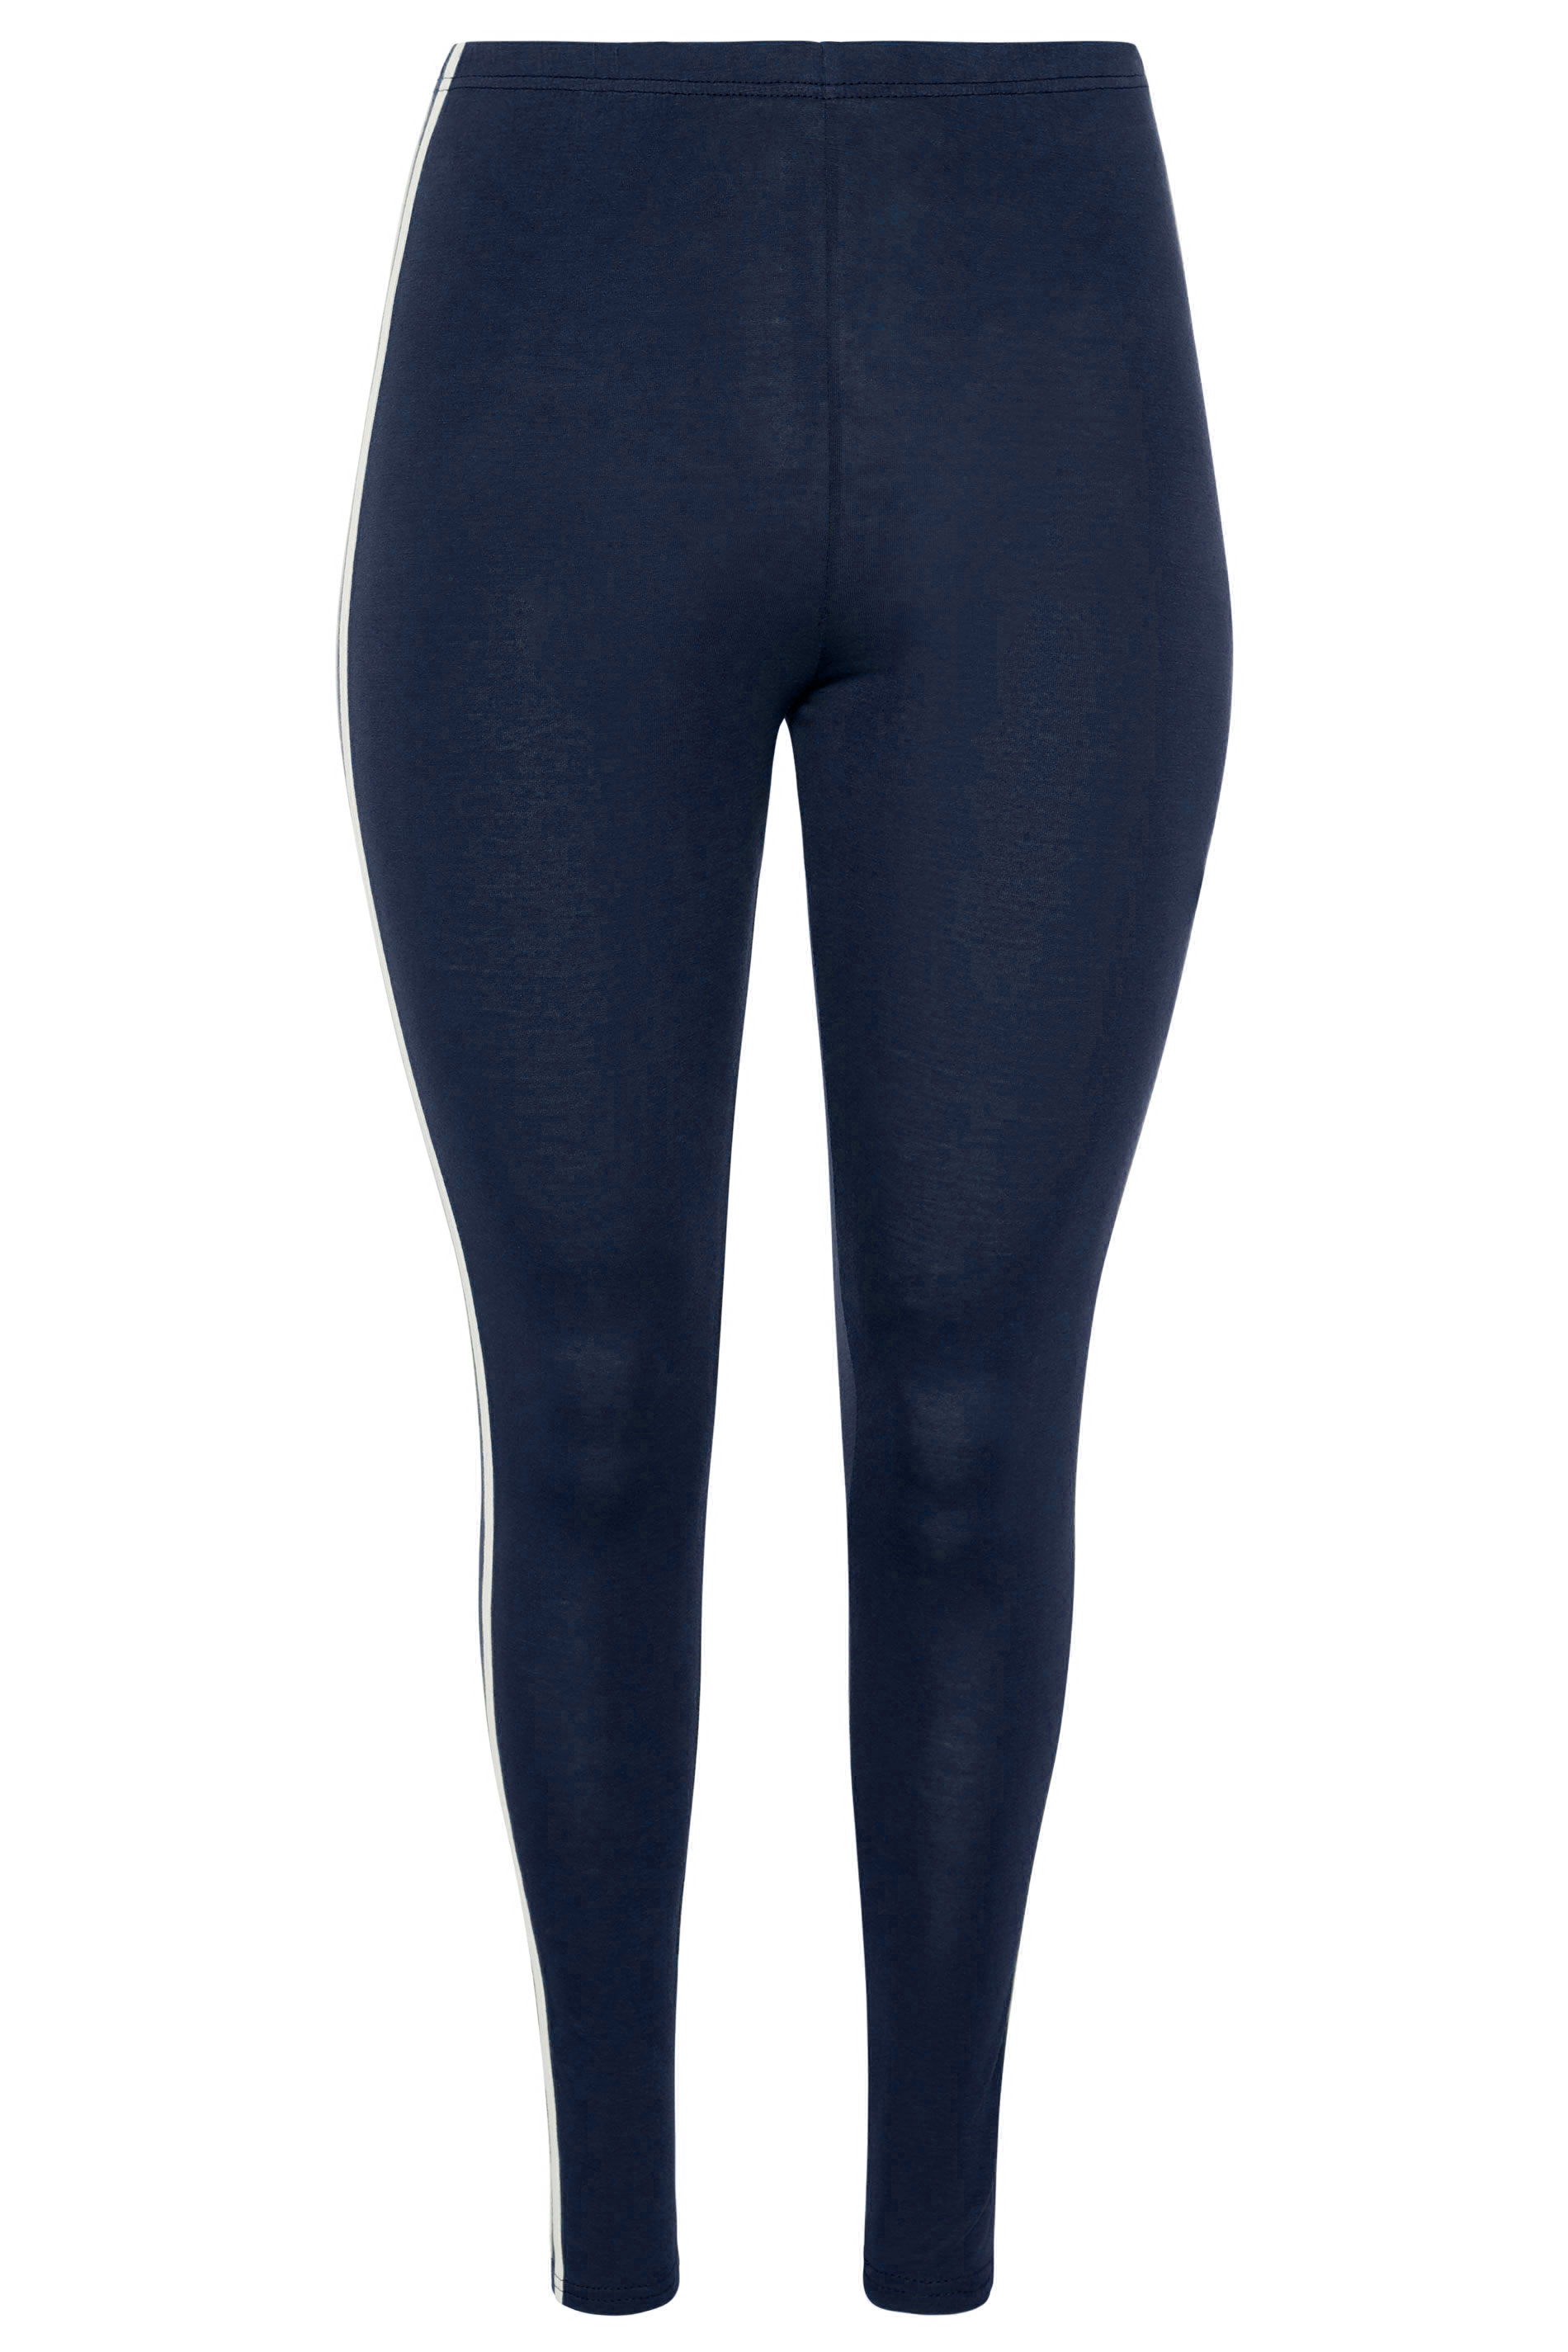 Peach Colour Leggings Navy Shorts Black Flare Trousers Womens Work Cropped  Yoga Pants for Women UK Brown Leggings Plus : : Fashion